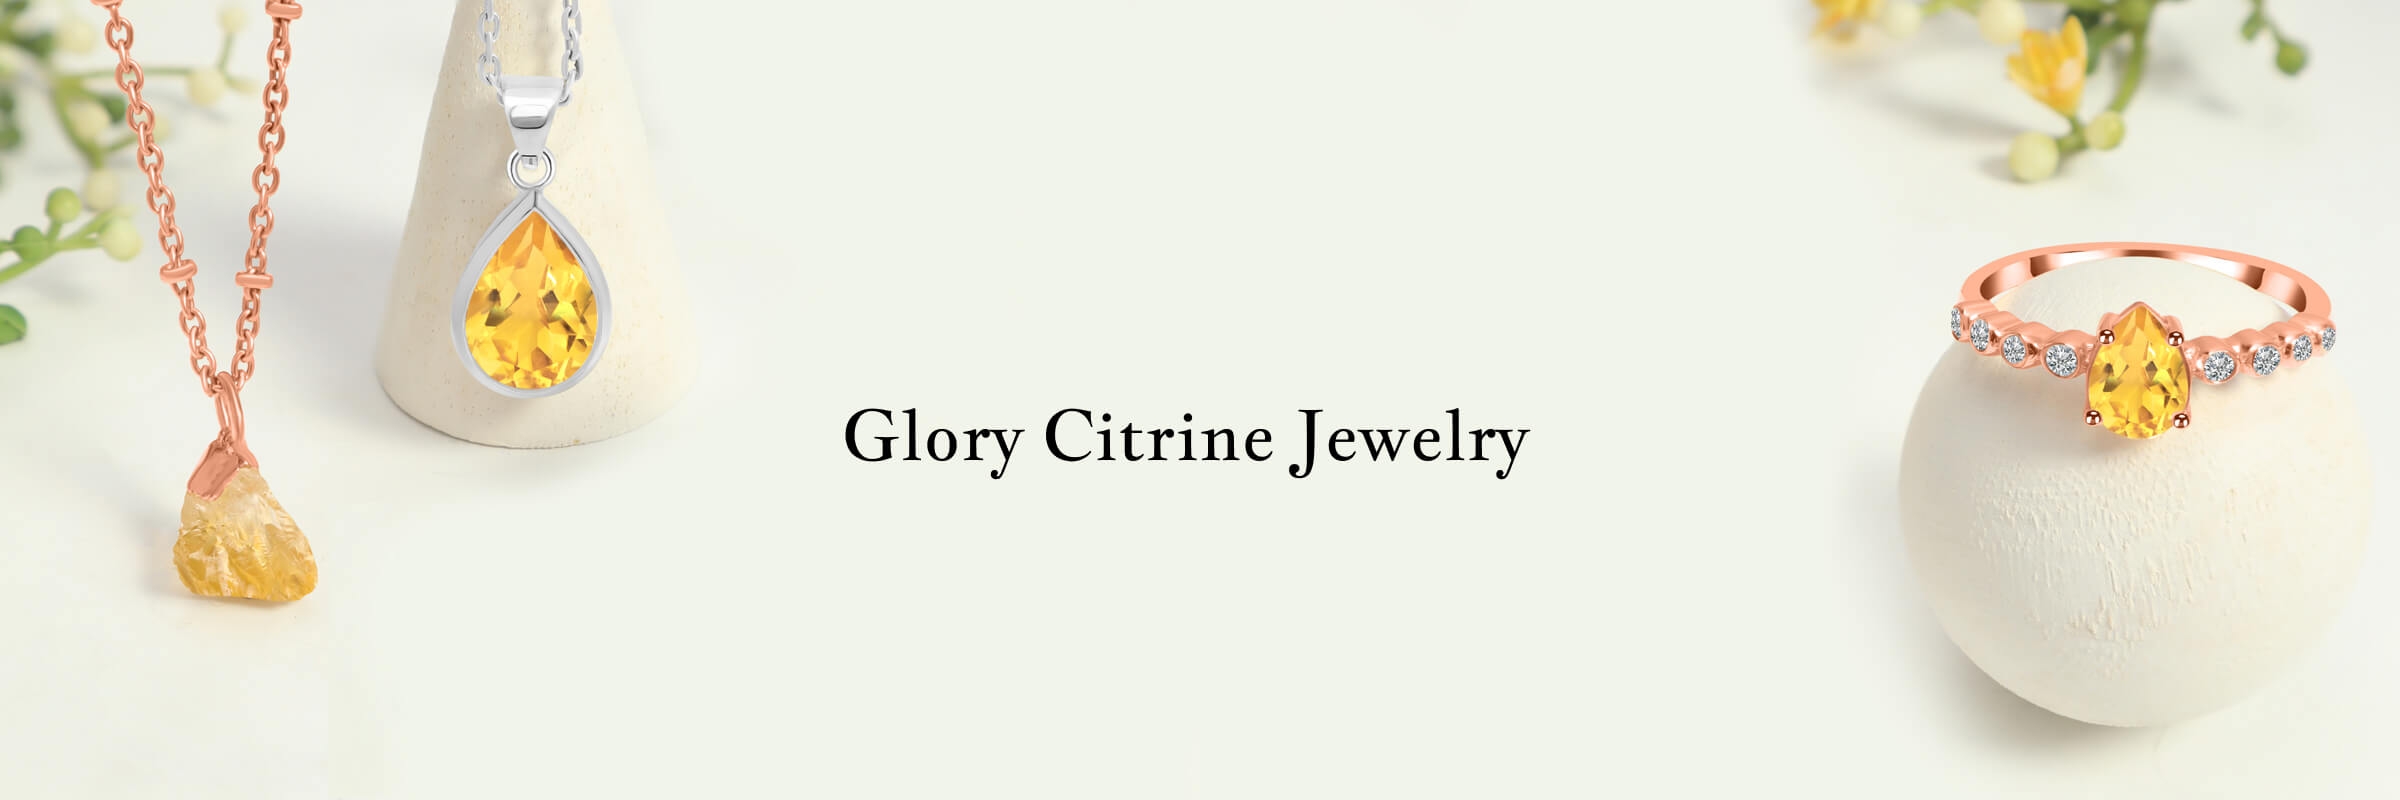 Citrine jewelry